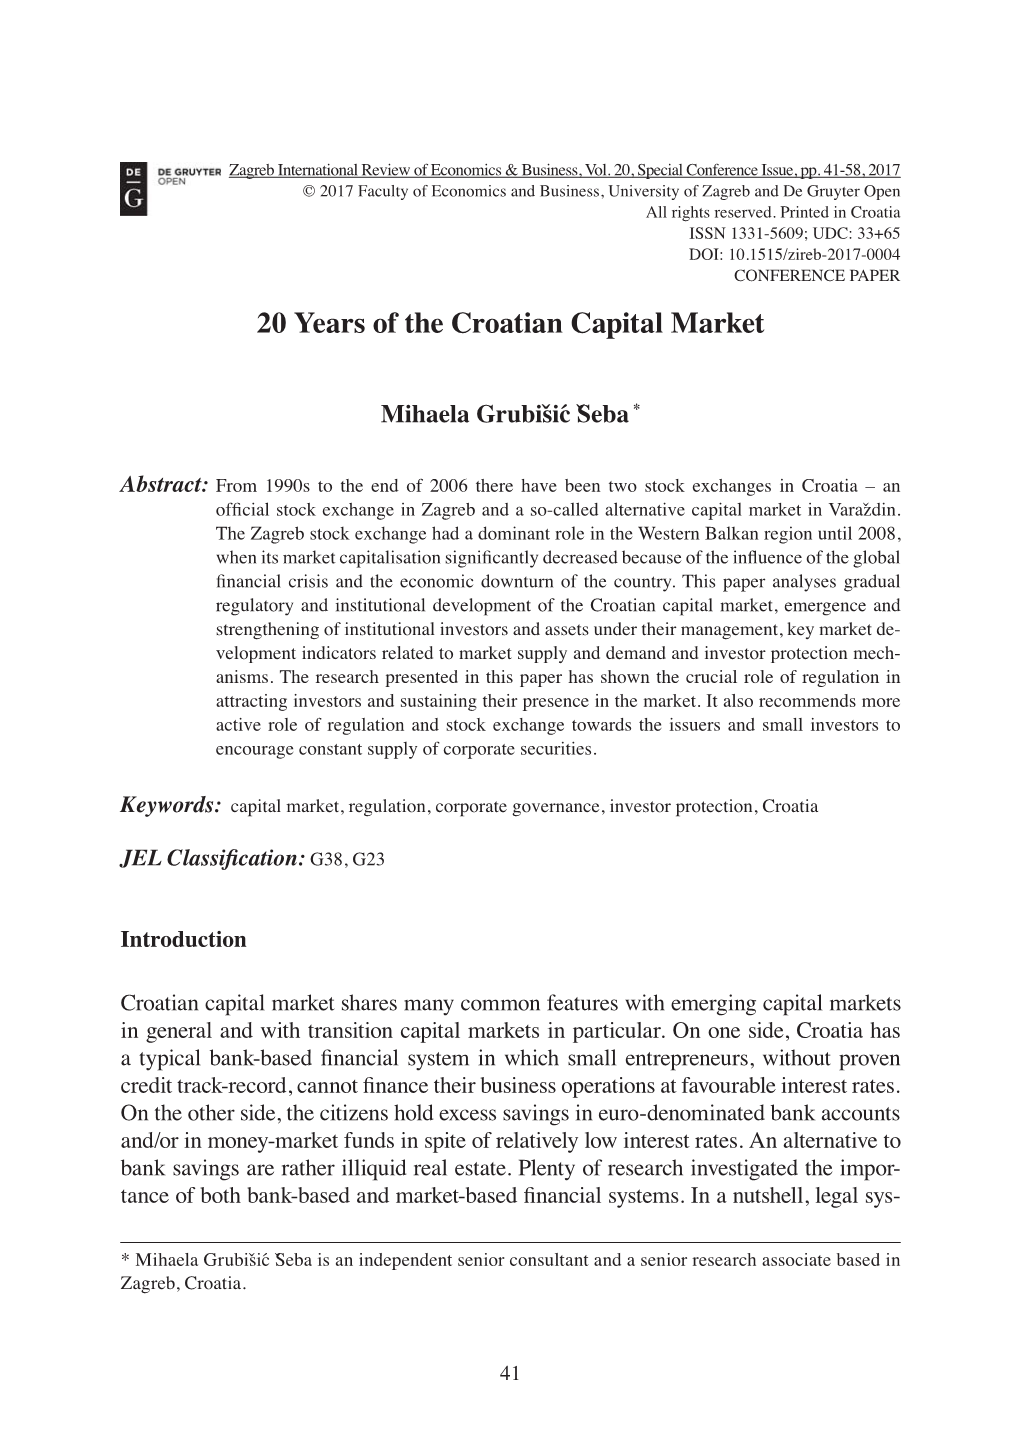 20 Years of the Croatian Capital Market